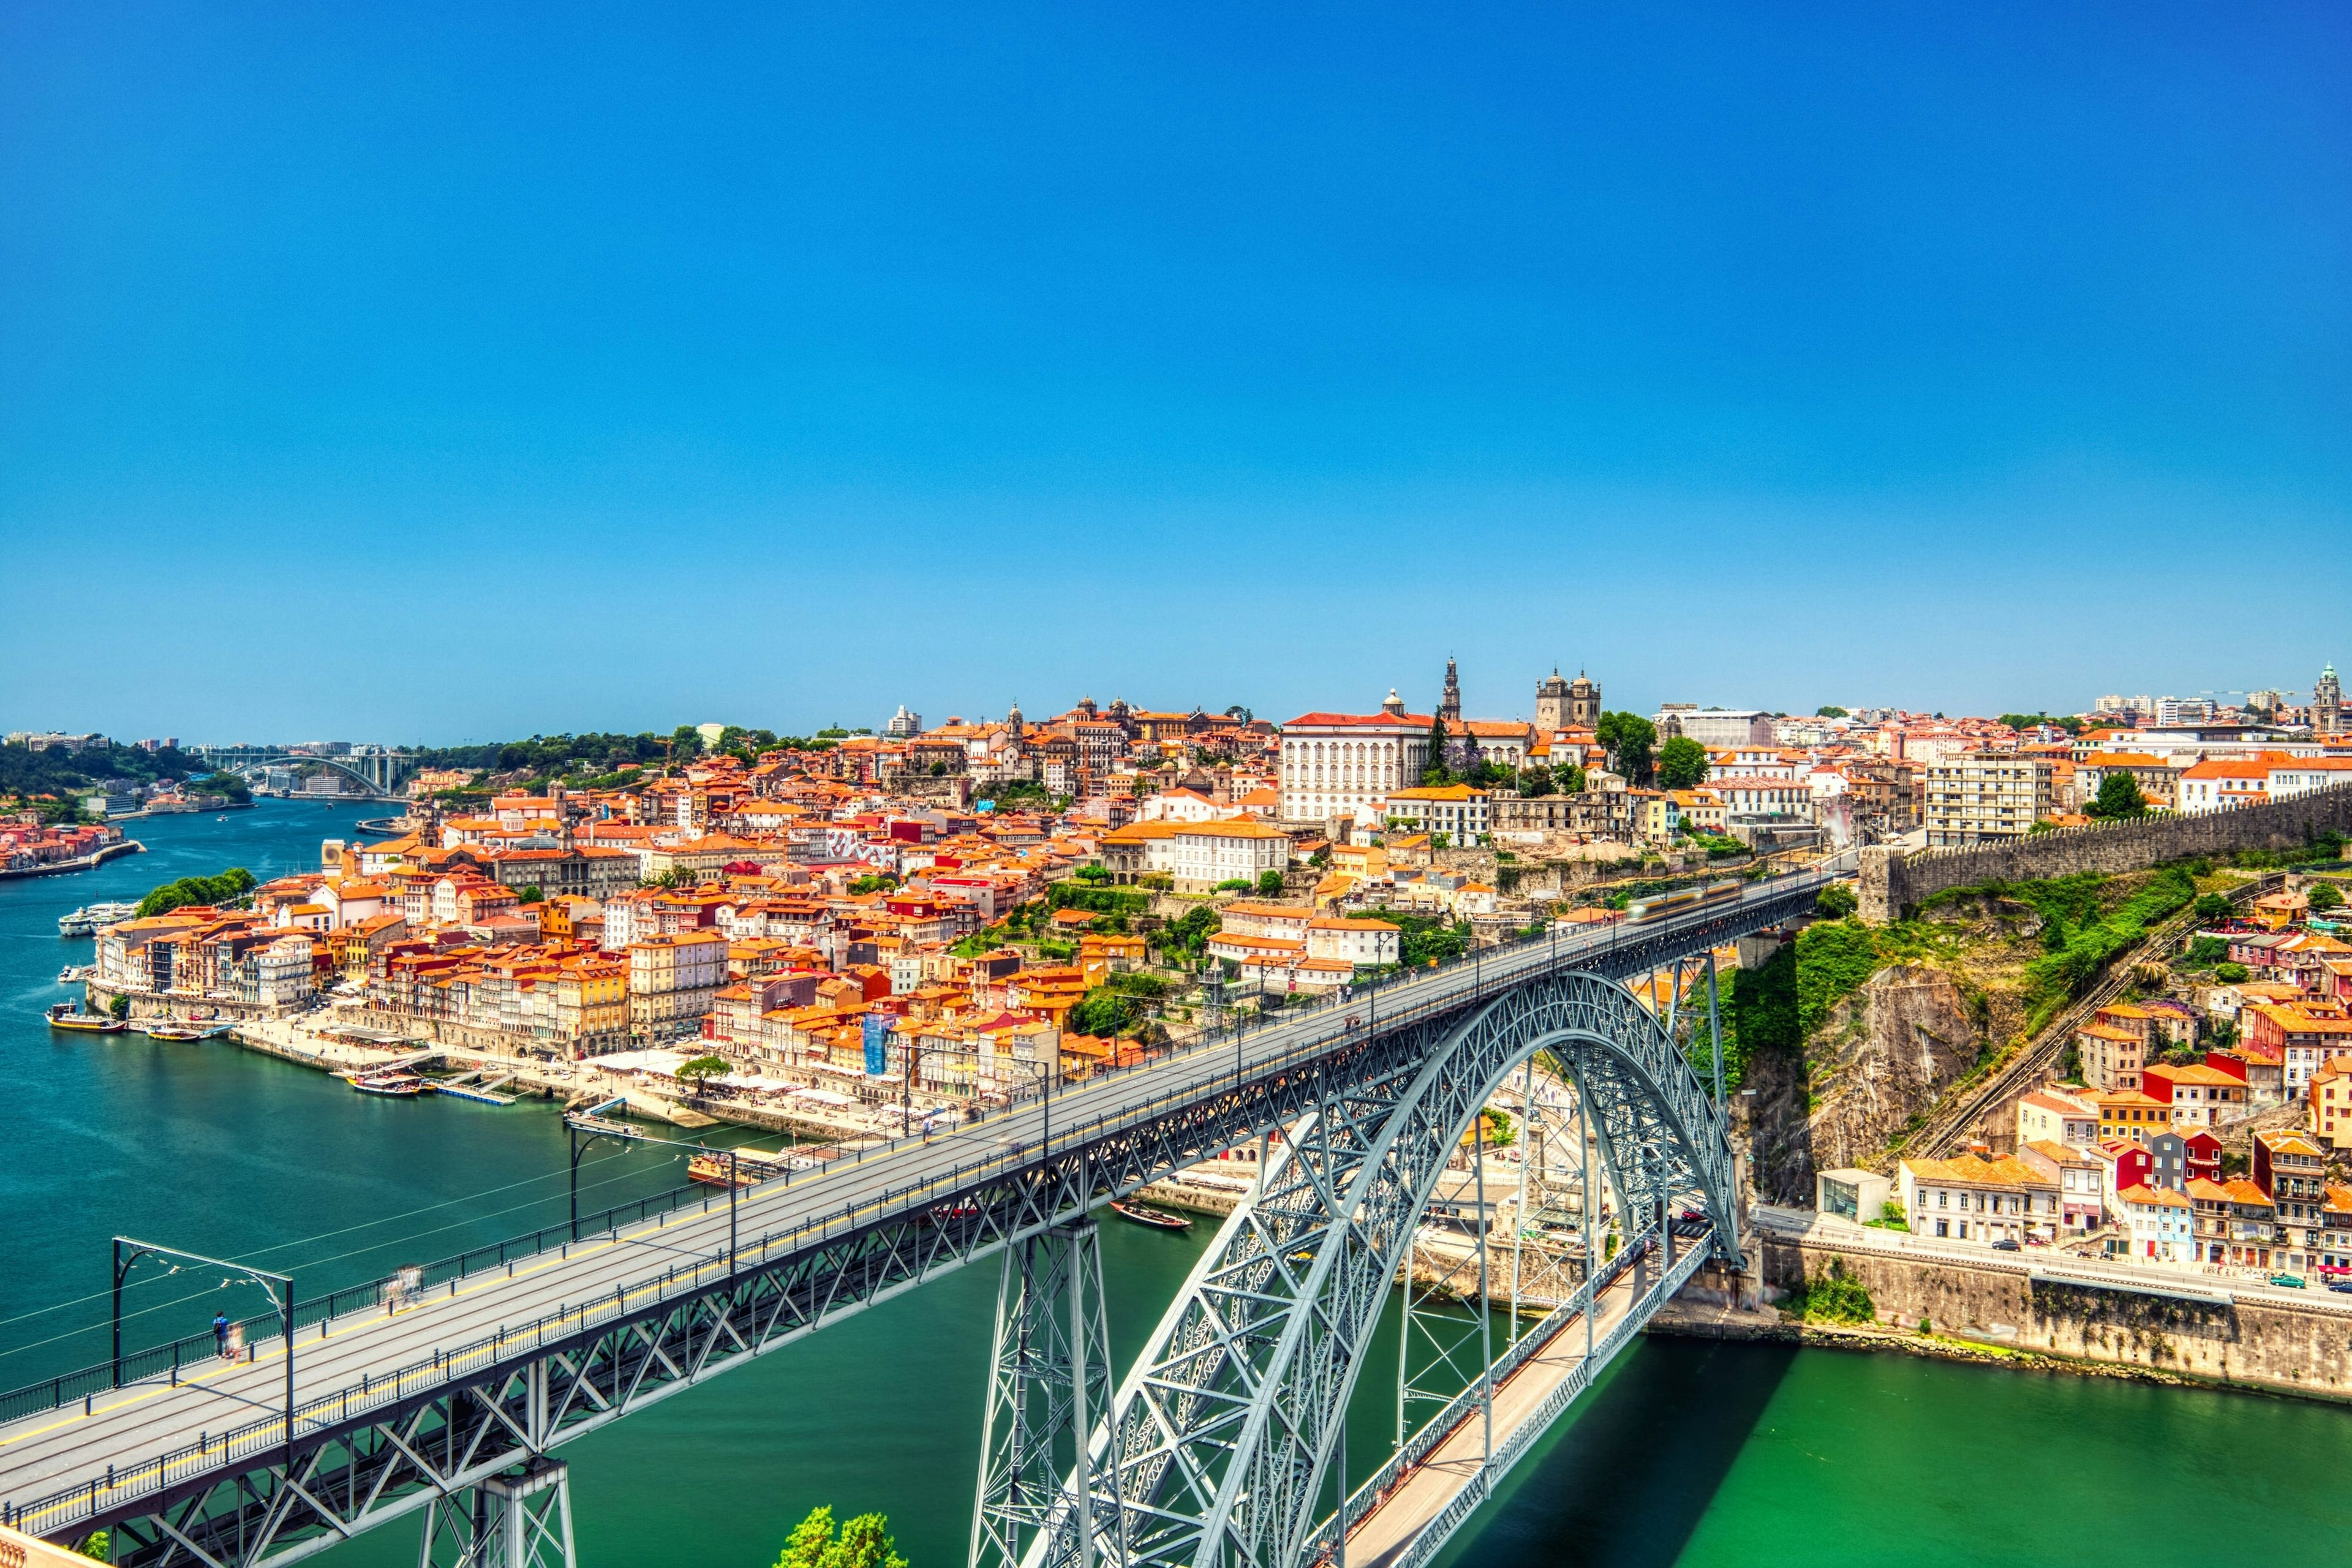 An image of a bridge over a river in Porto